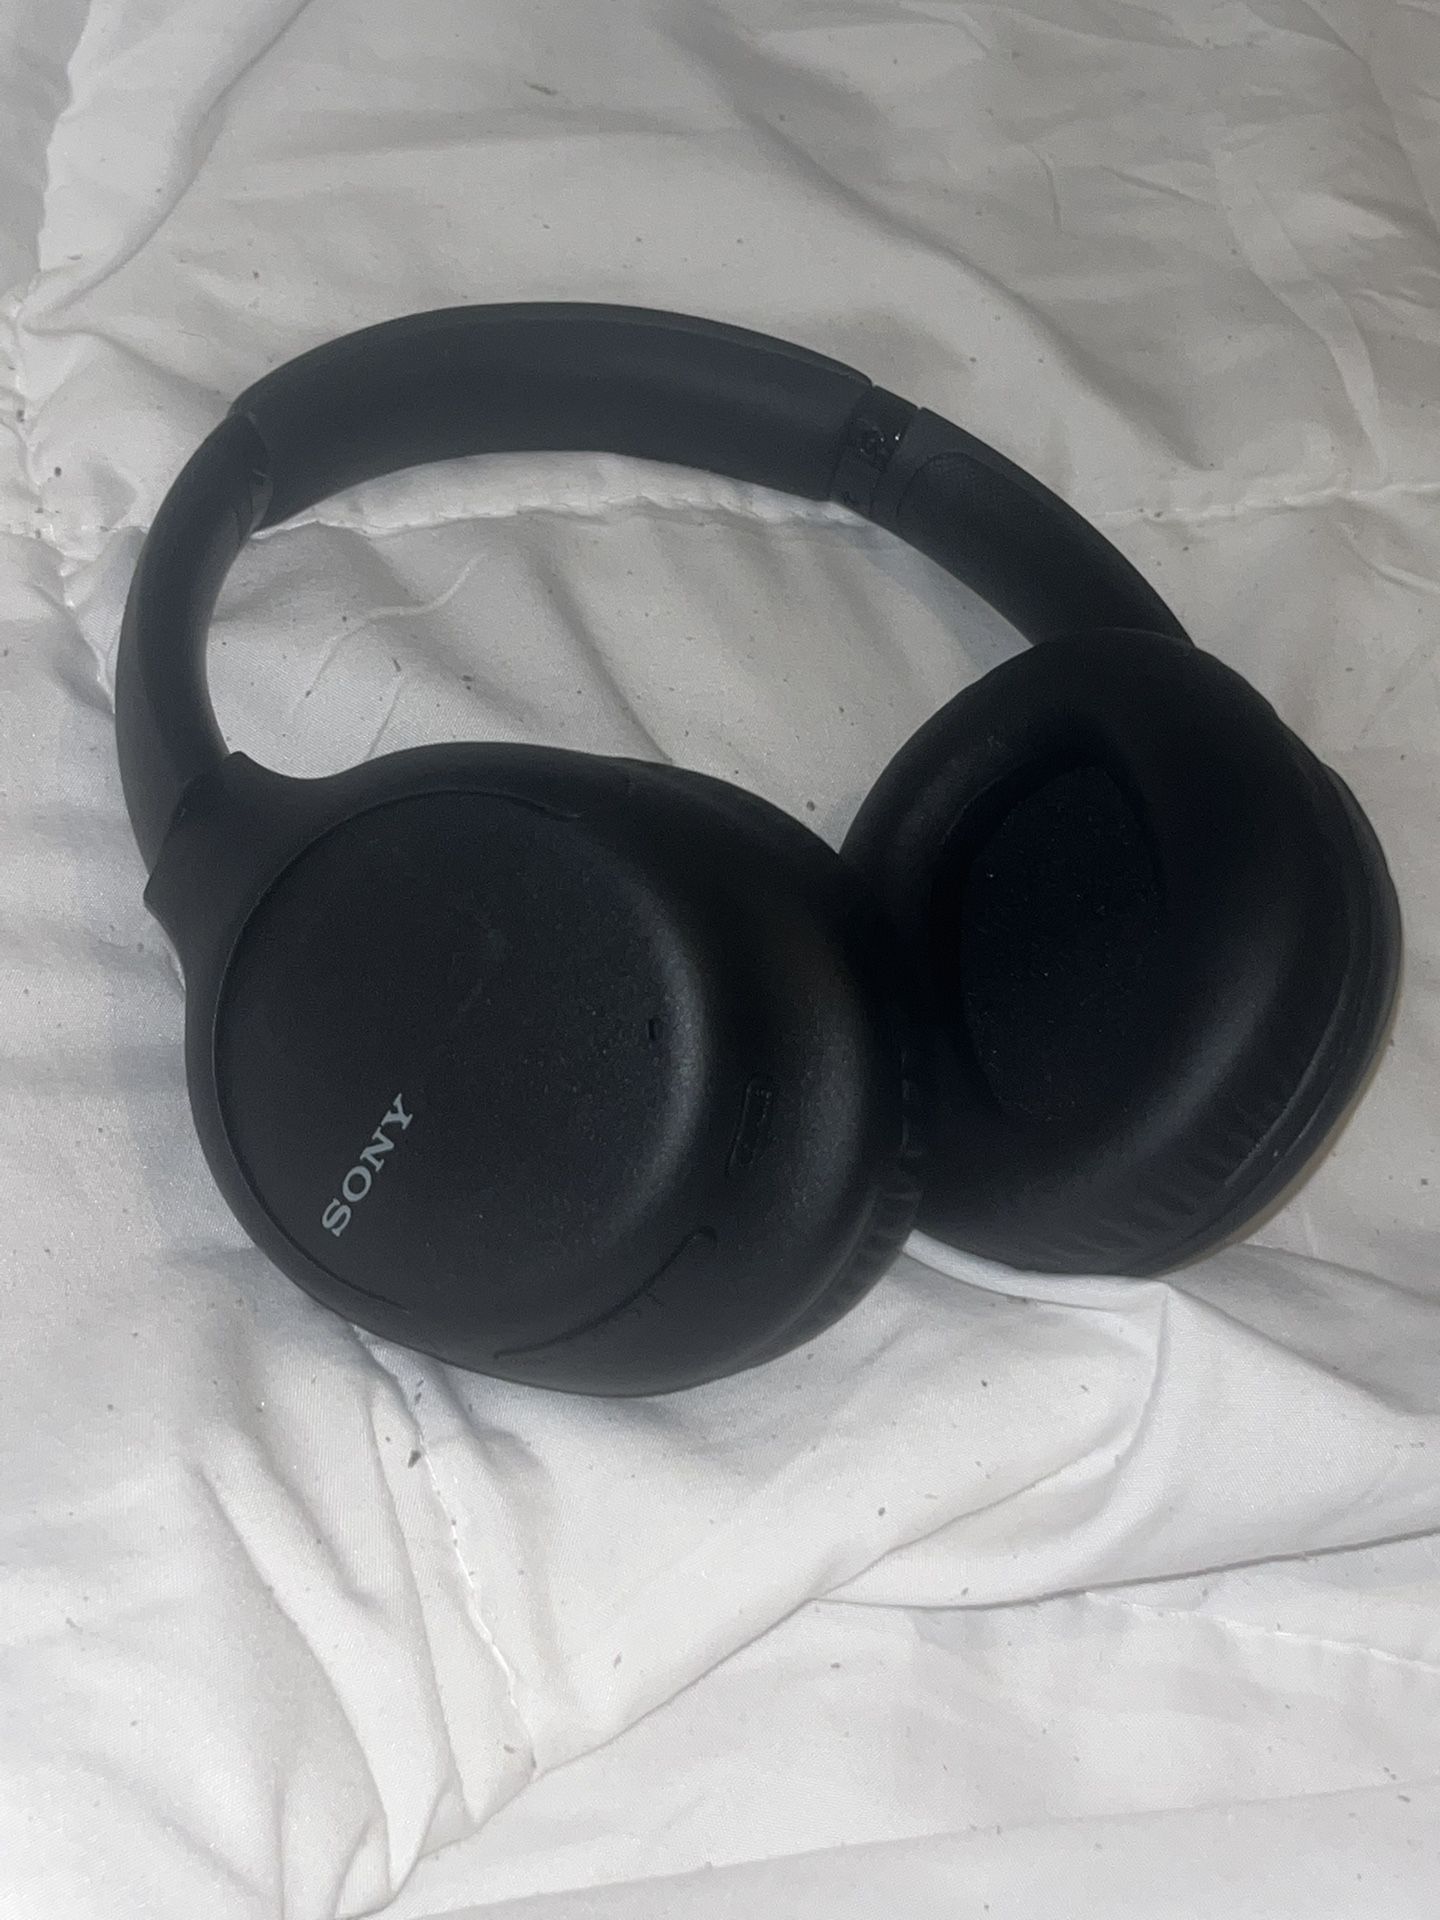 Brand new Sony Noise Canceling Headphones 